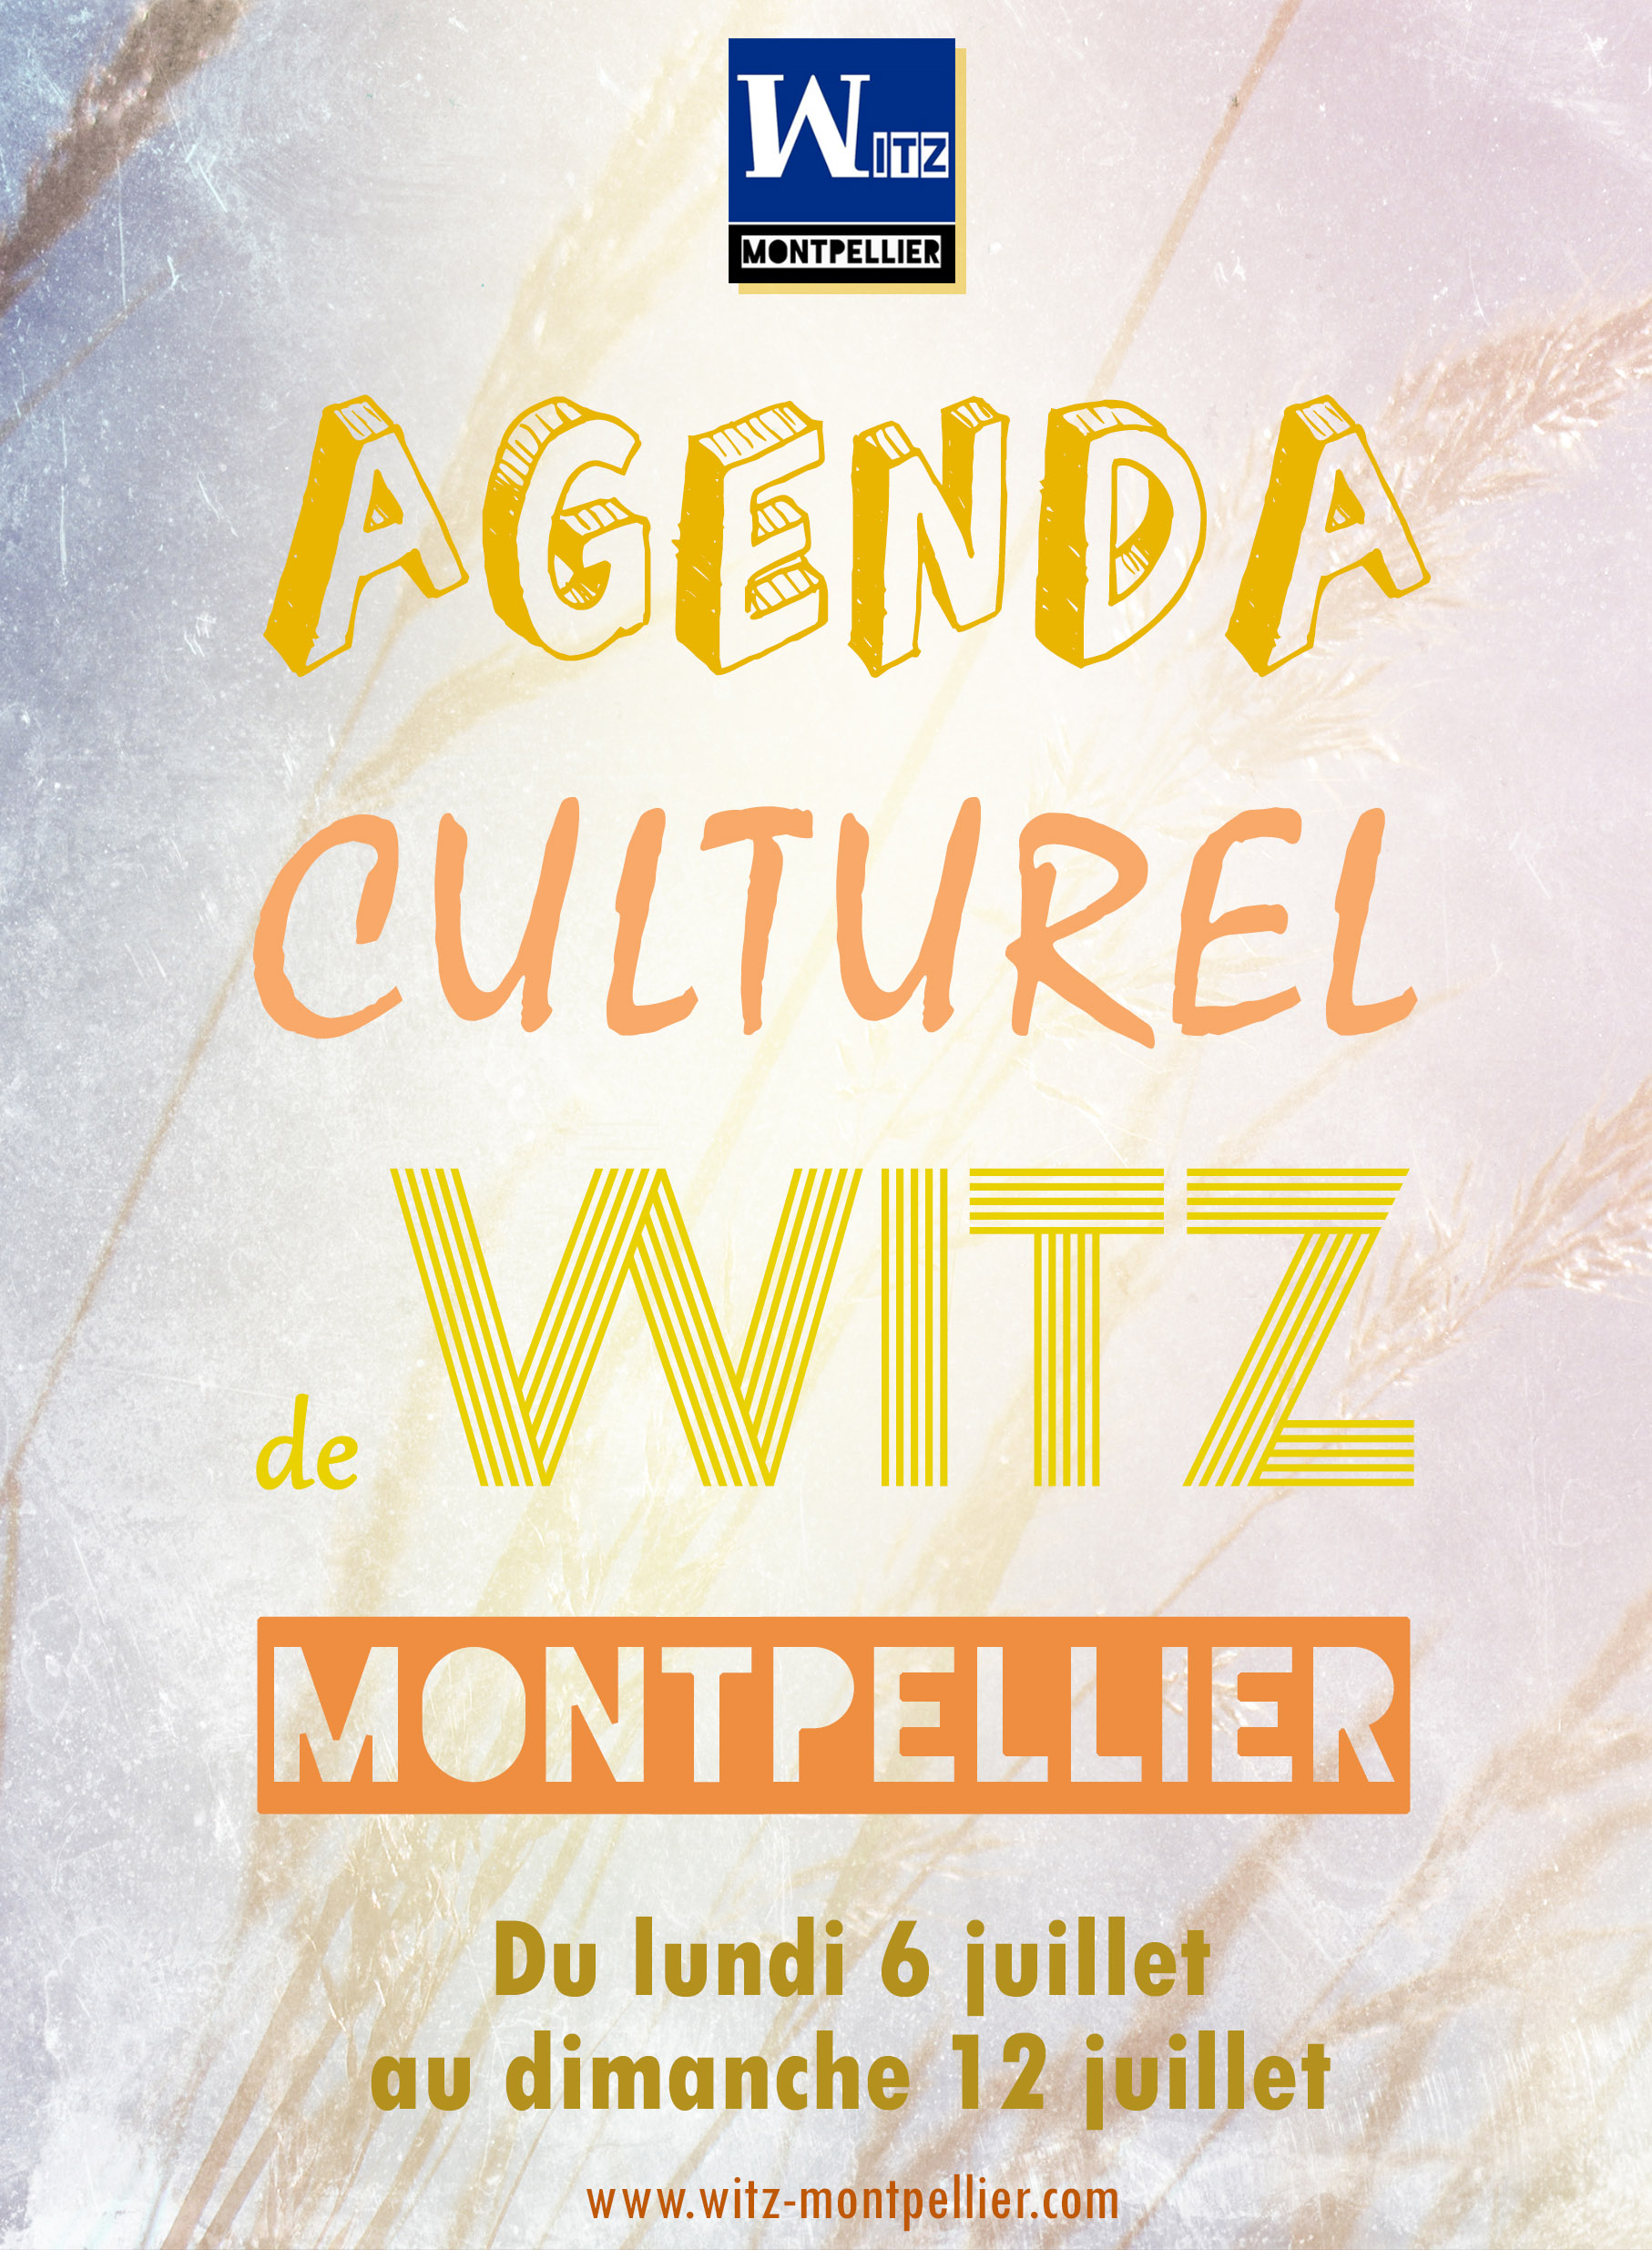 Agenda de la semaine - Witz Montpellier.jpg